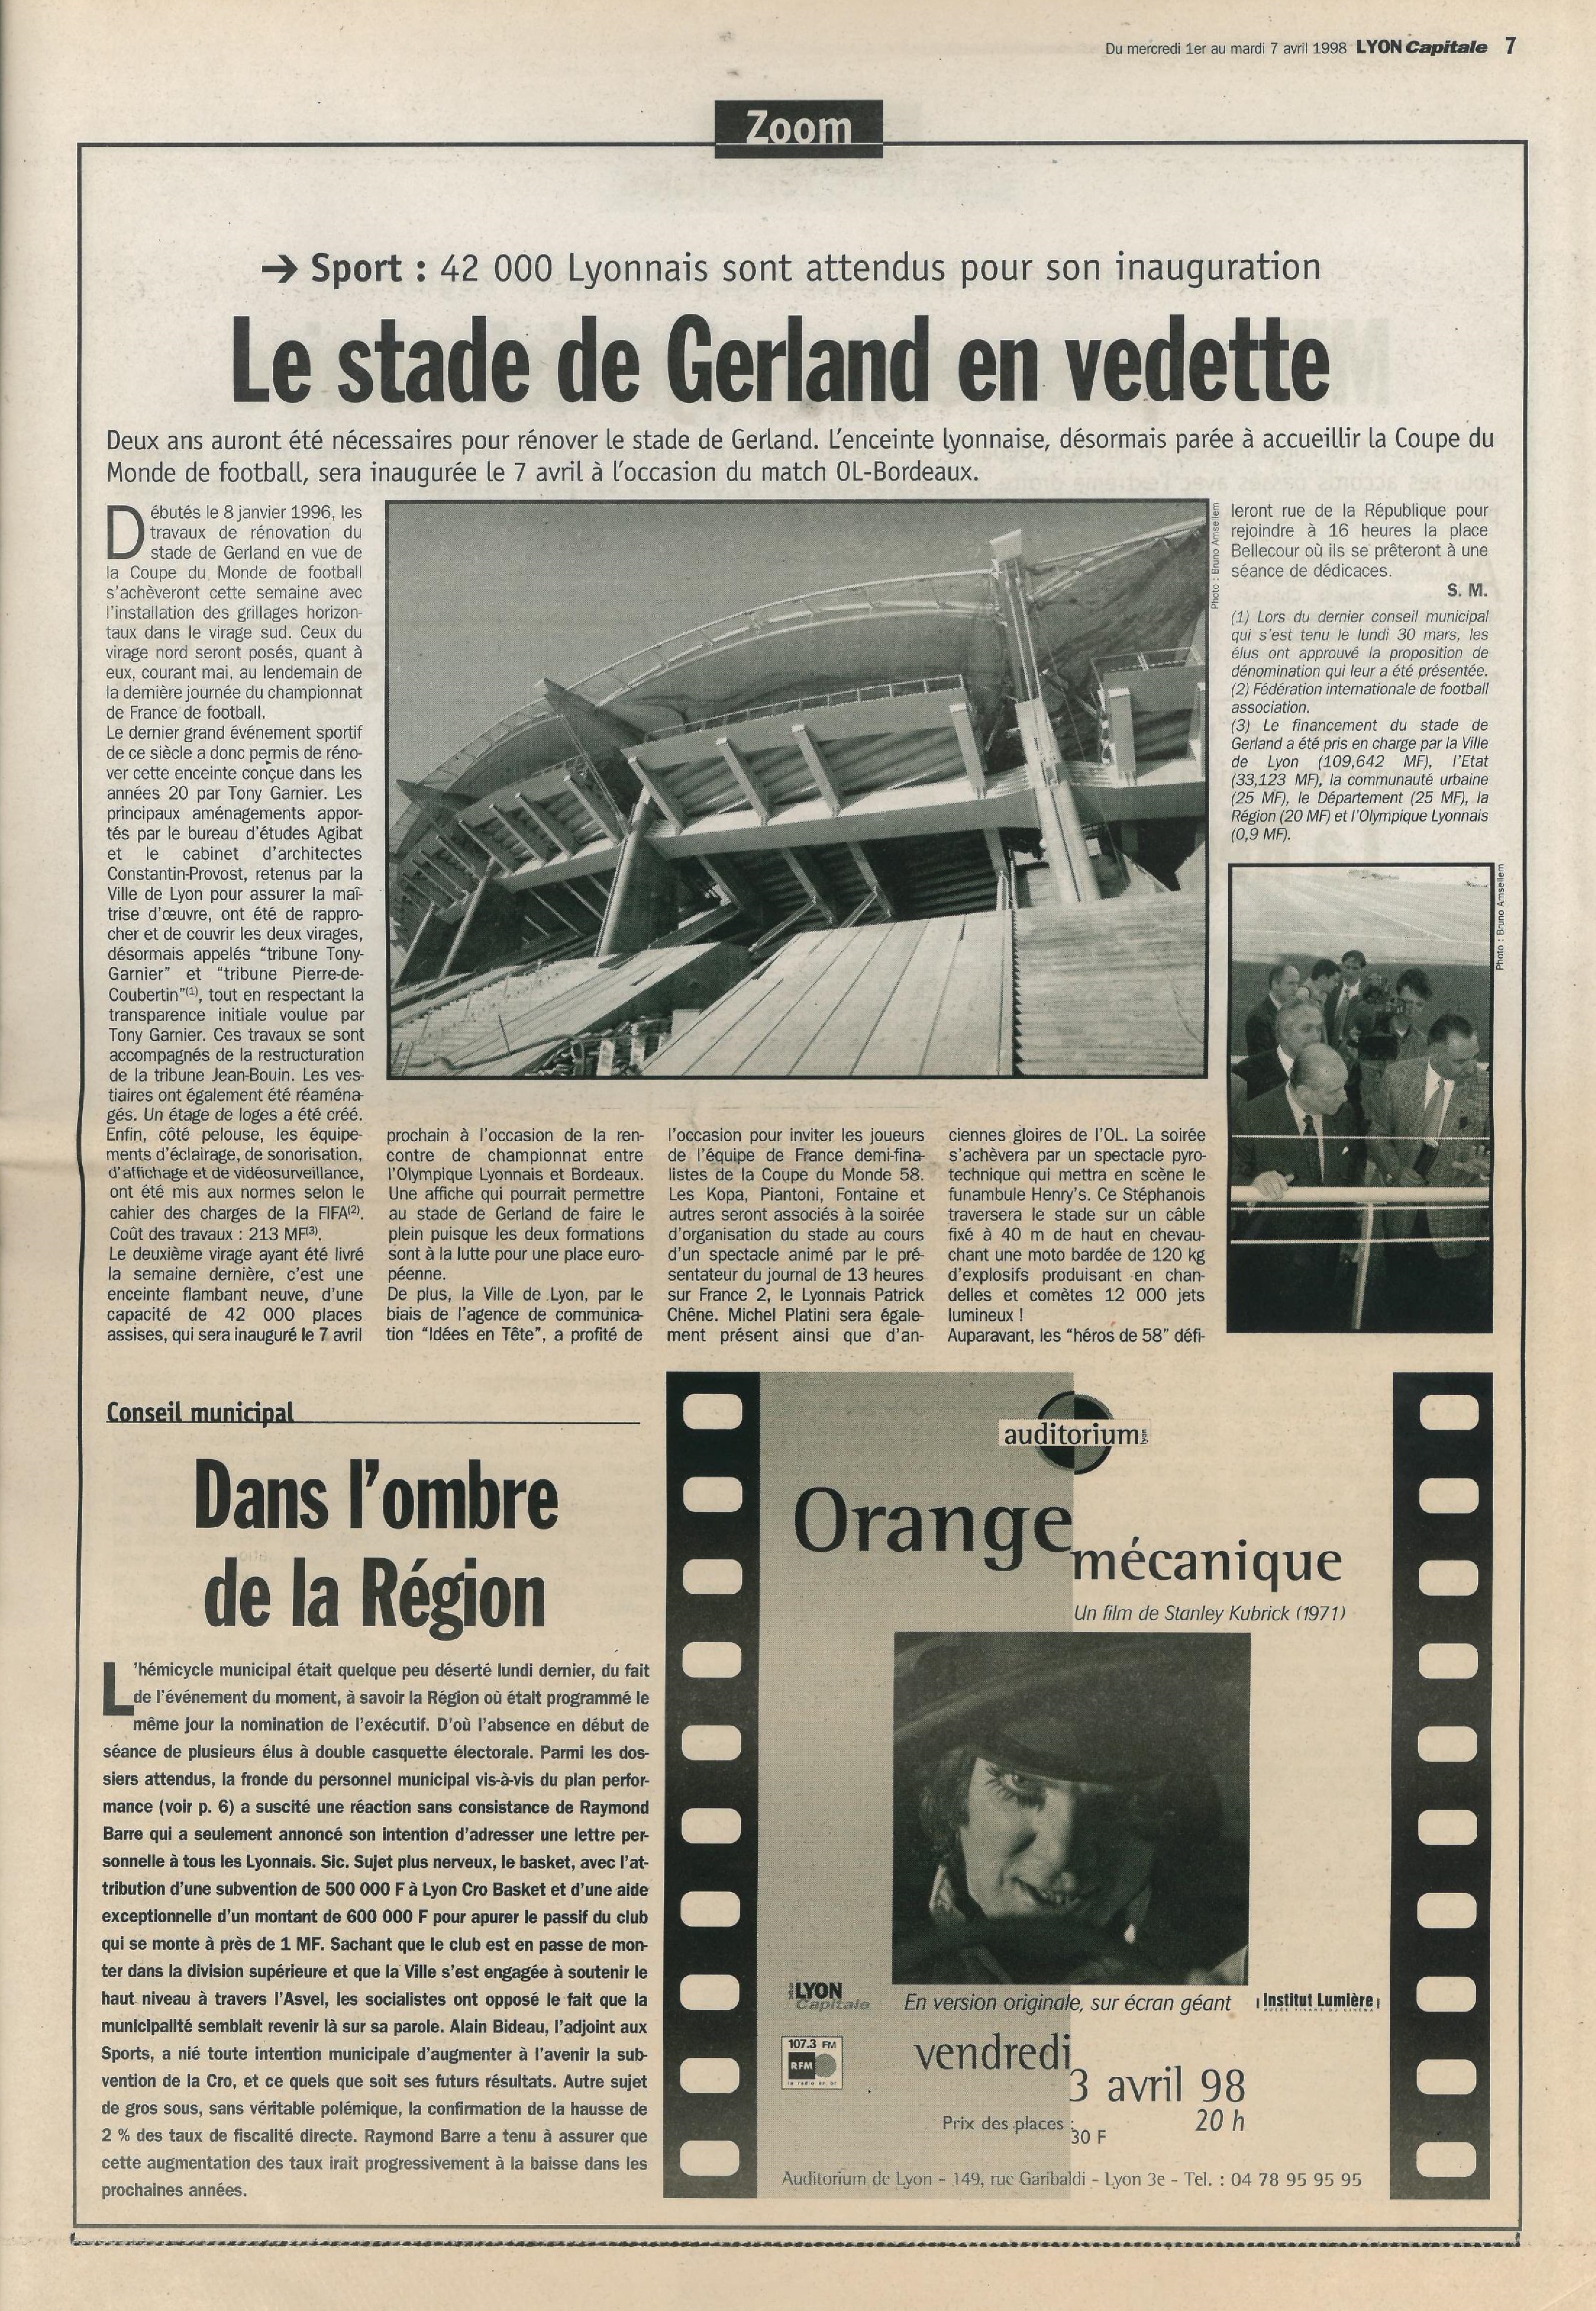 Lyon Capitale n°165, 1er avril 1998, p. 7 © Lyon Capitale